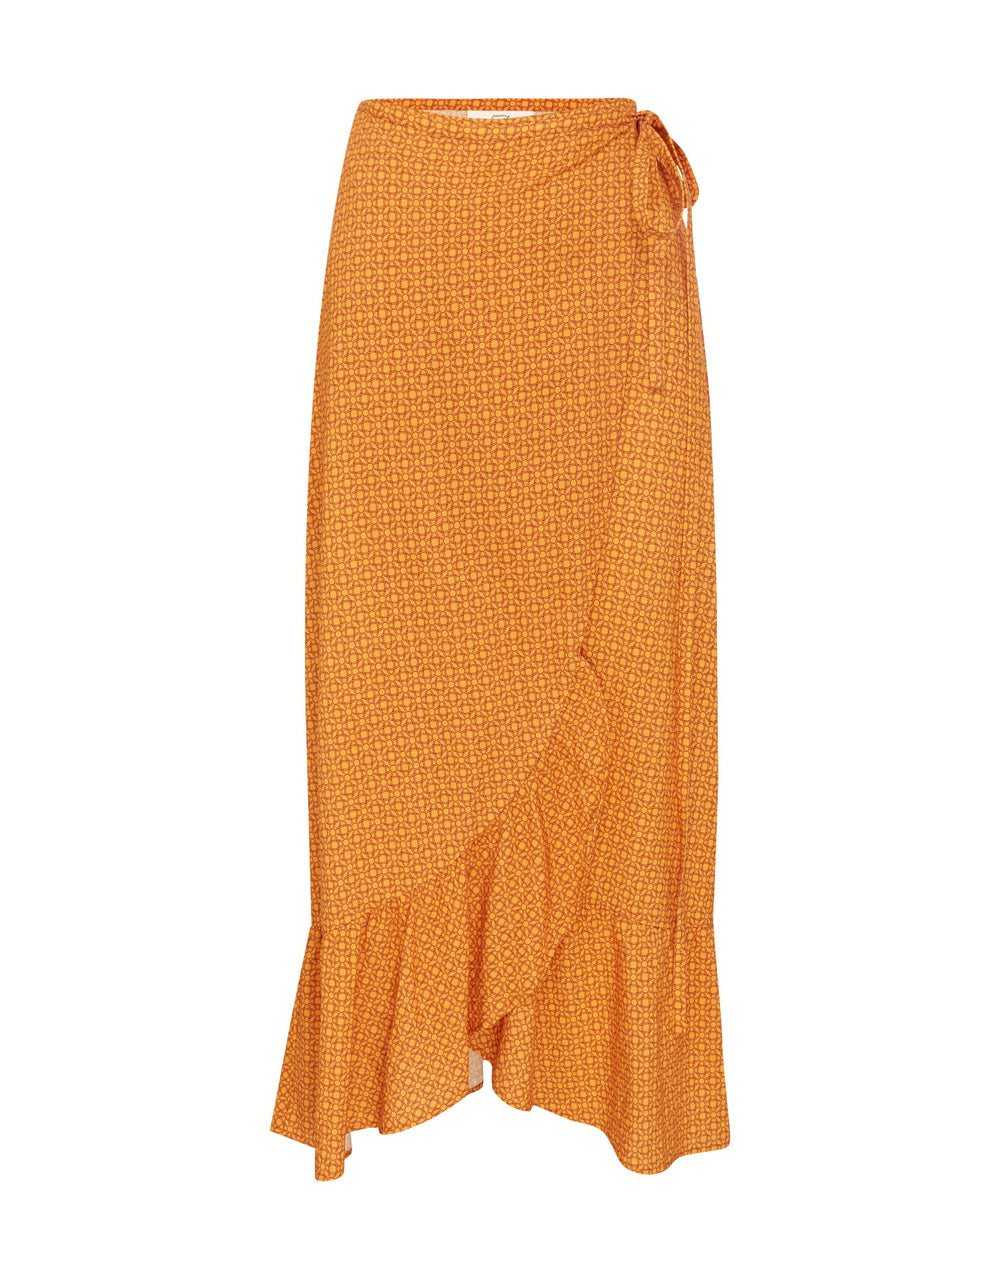 Peony Swimwear Marigold Ruffle Wrap Skirt